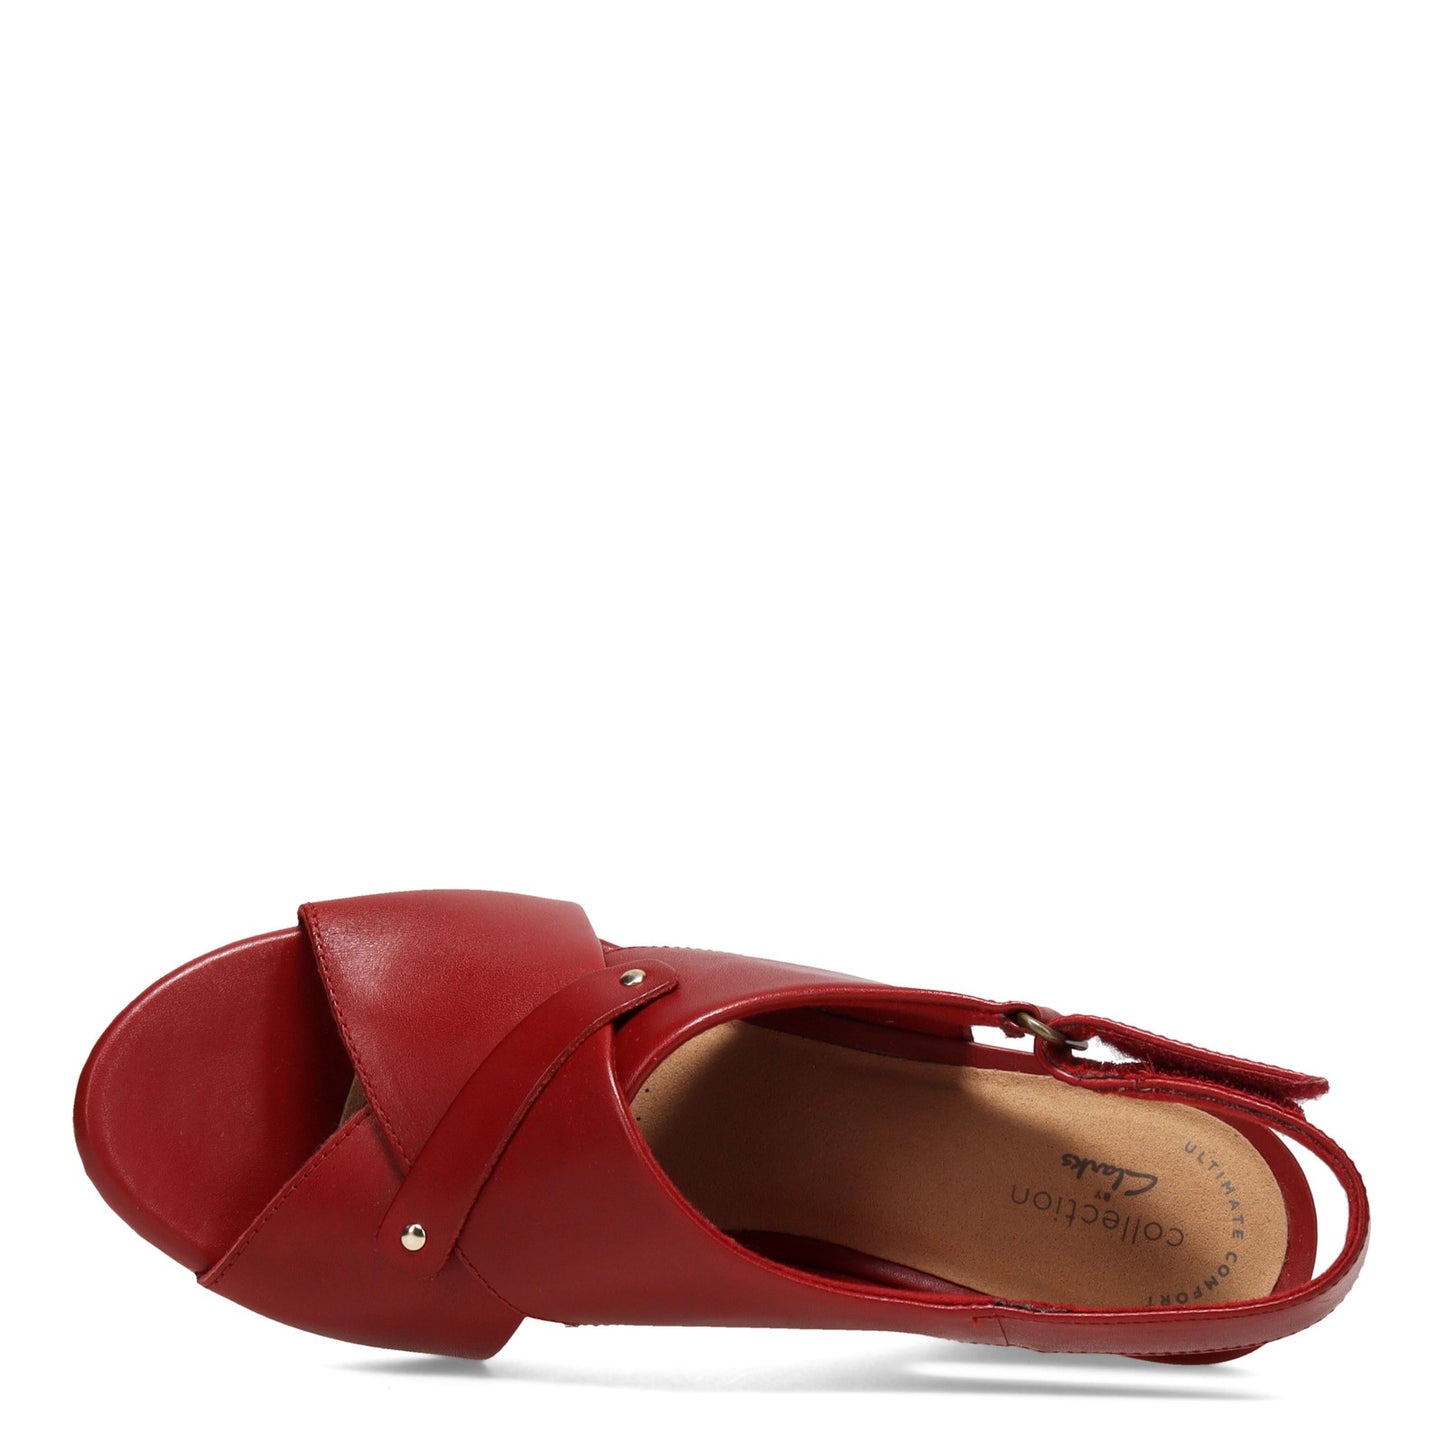 Peltz Shoes  Women's Clarks Margee Eve Sandal RED 26158135